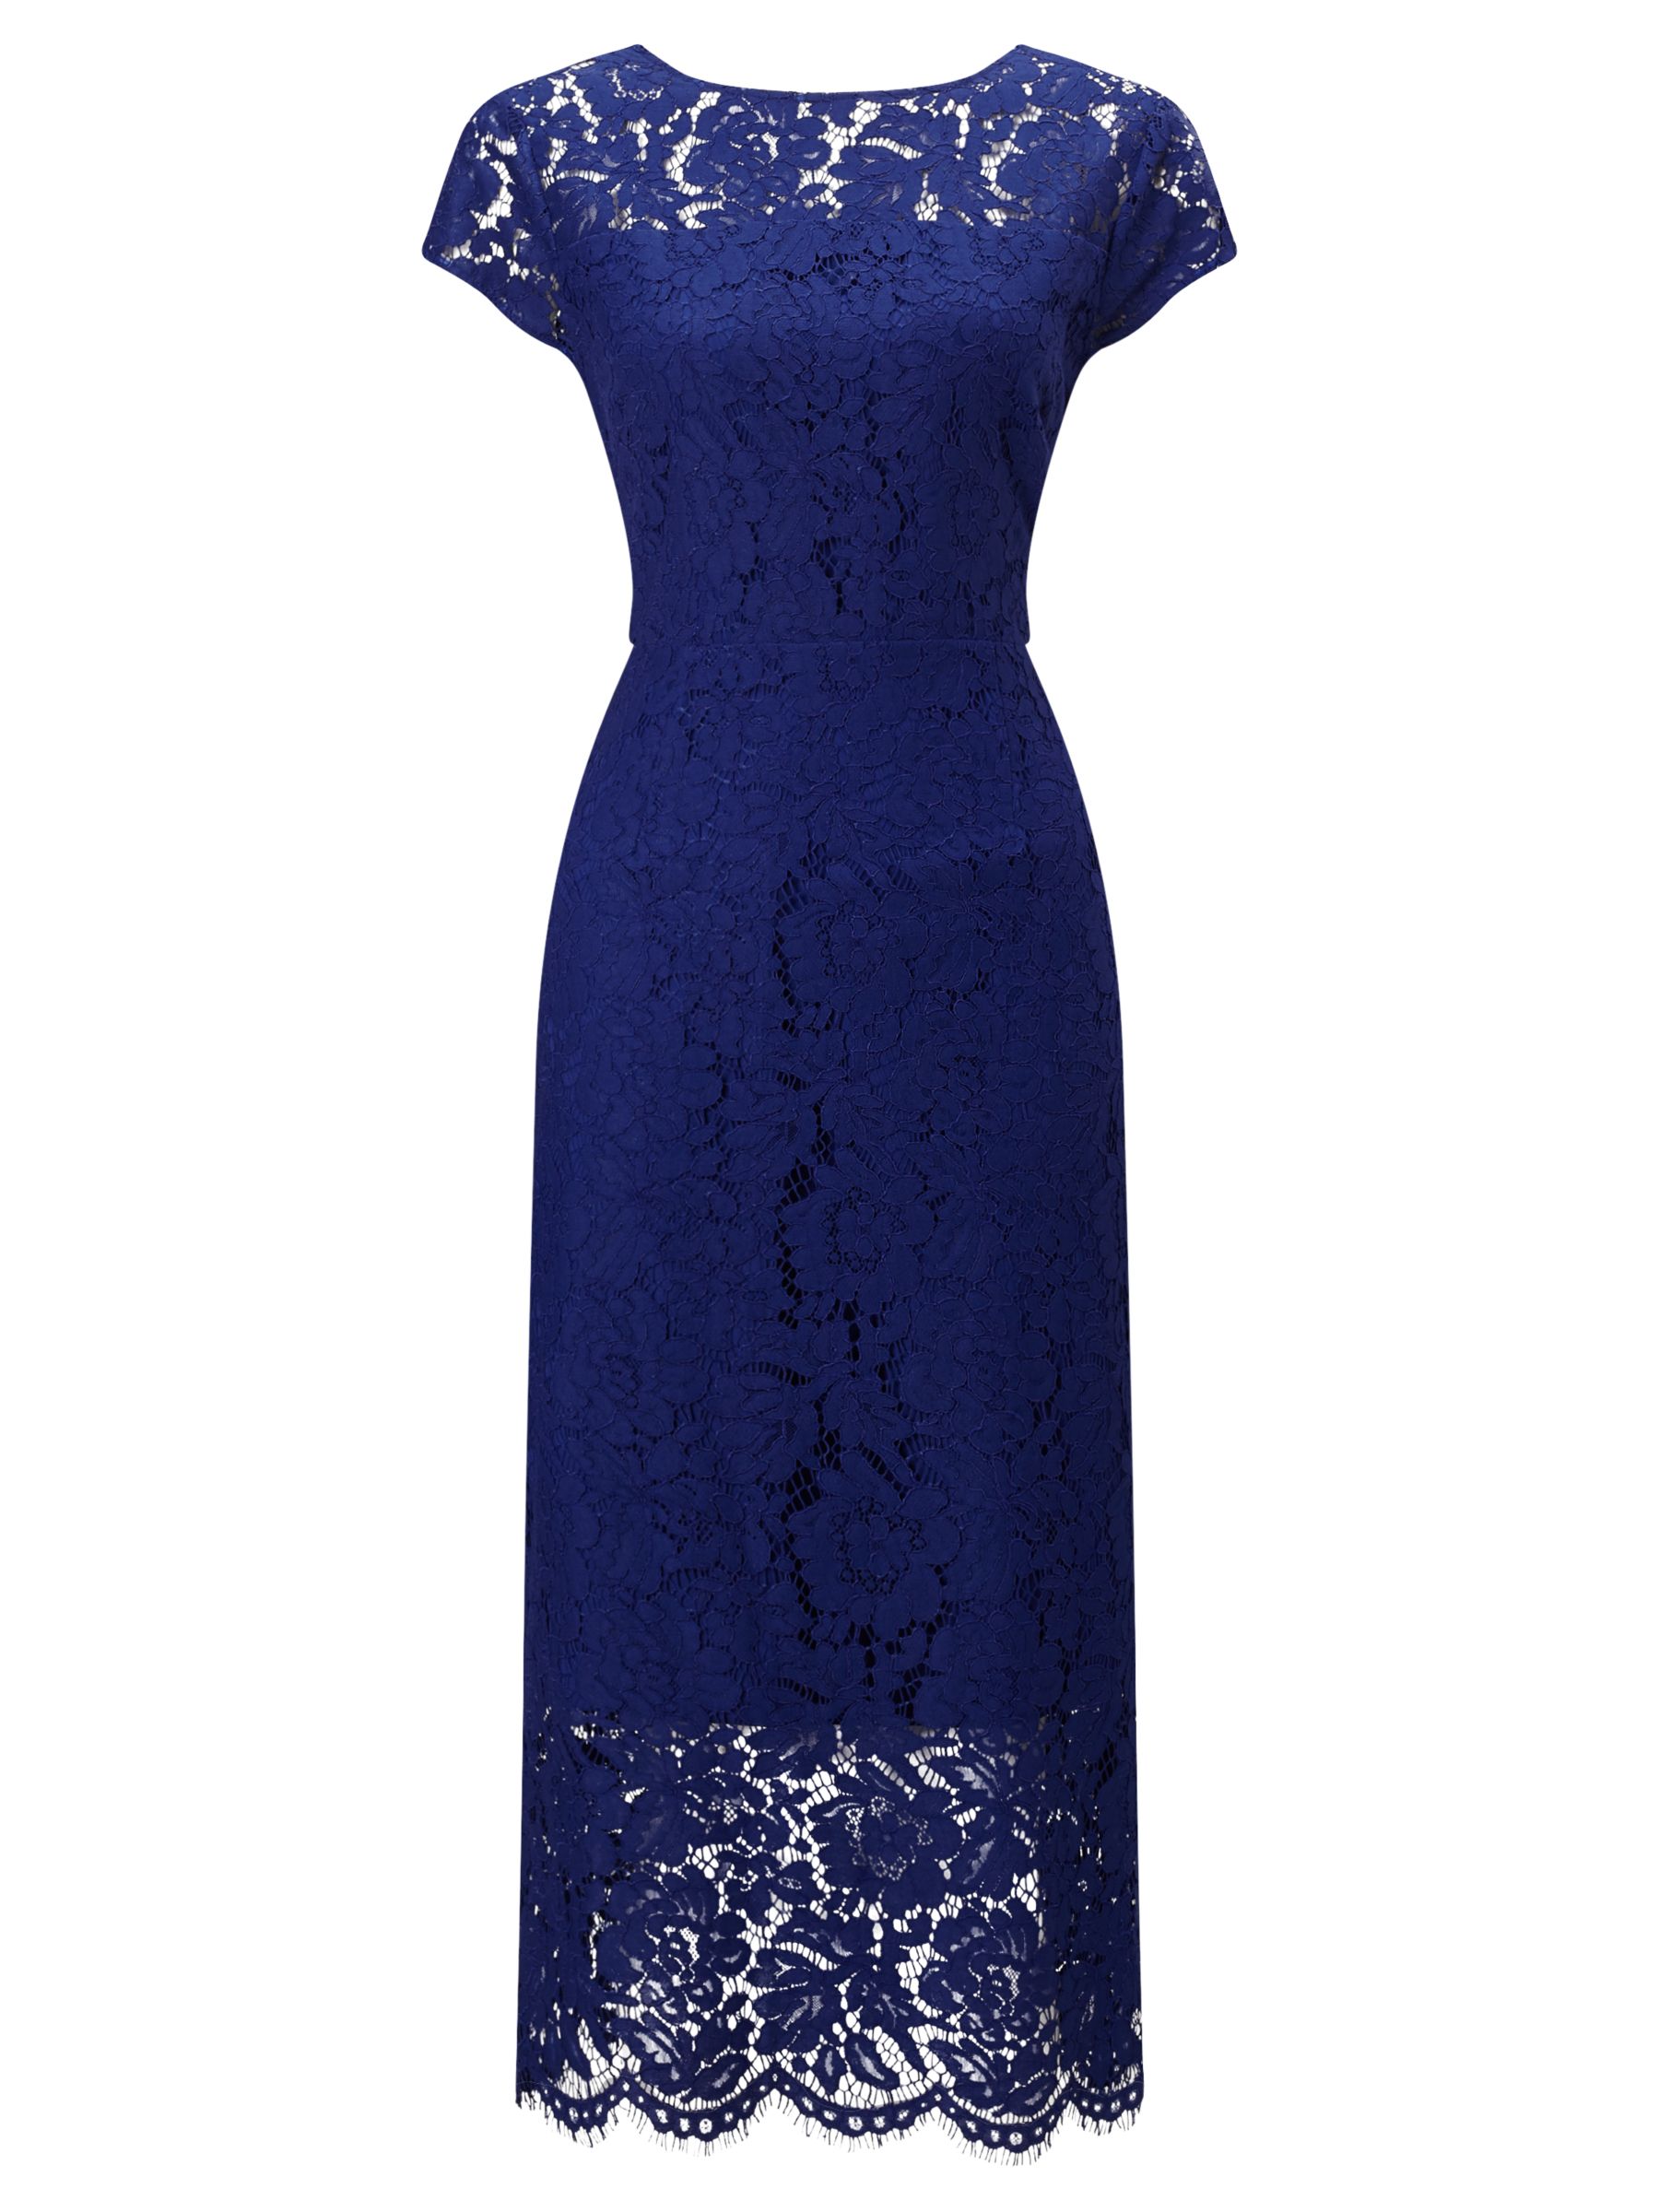 John Lewis & Partners Short Sleeve Lace Dress, Blue, 18